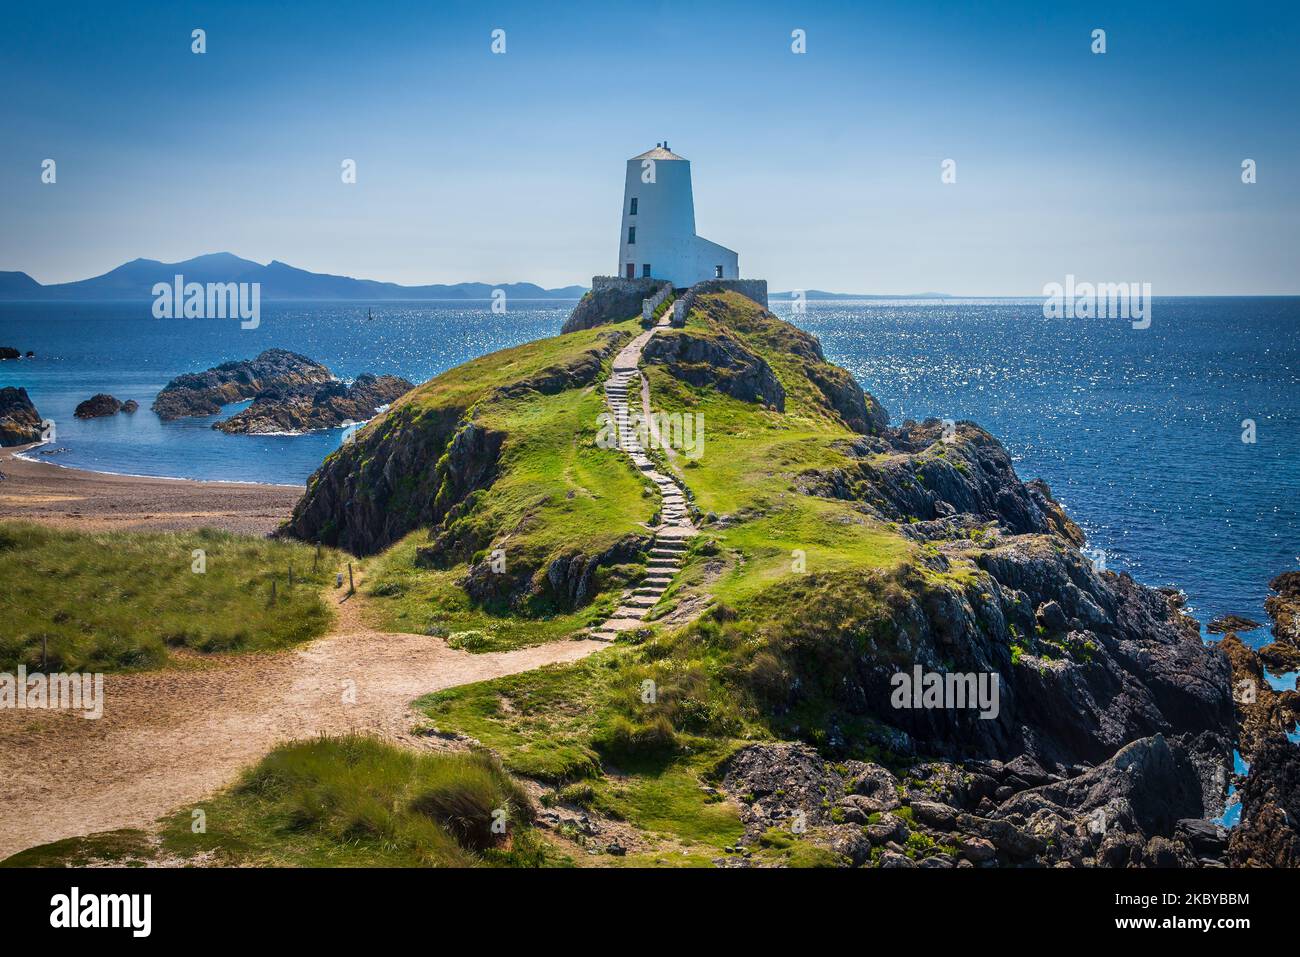 Llanddwyn Island (Ynys Llanddwyn). Anglesey North Wales. Tŵr Mawr lighthouse was modelled on the windmills of Anglesey, was built in 1845. Stock Photo